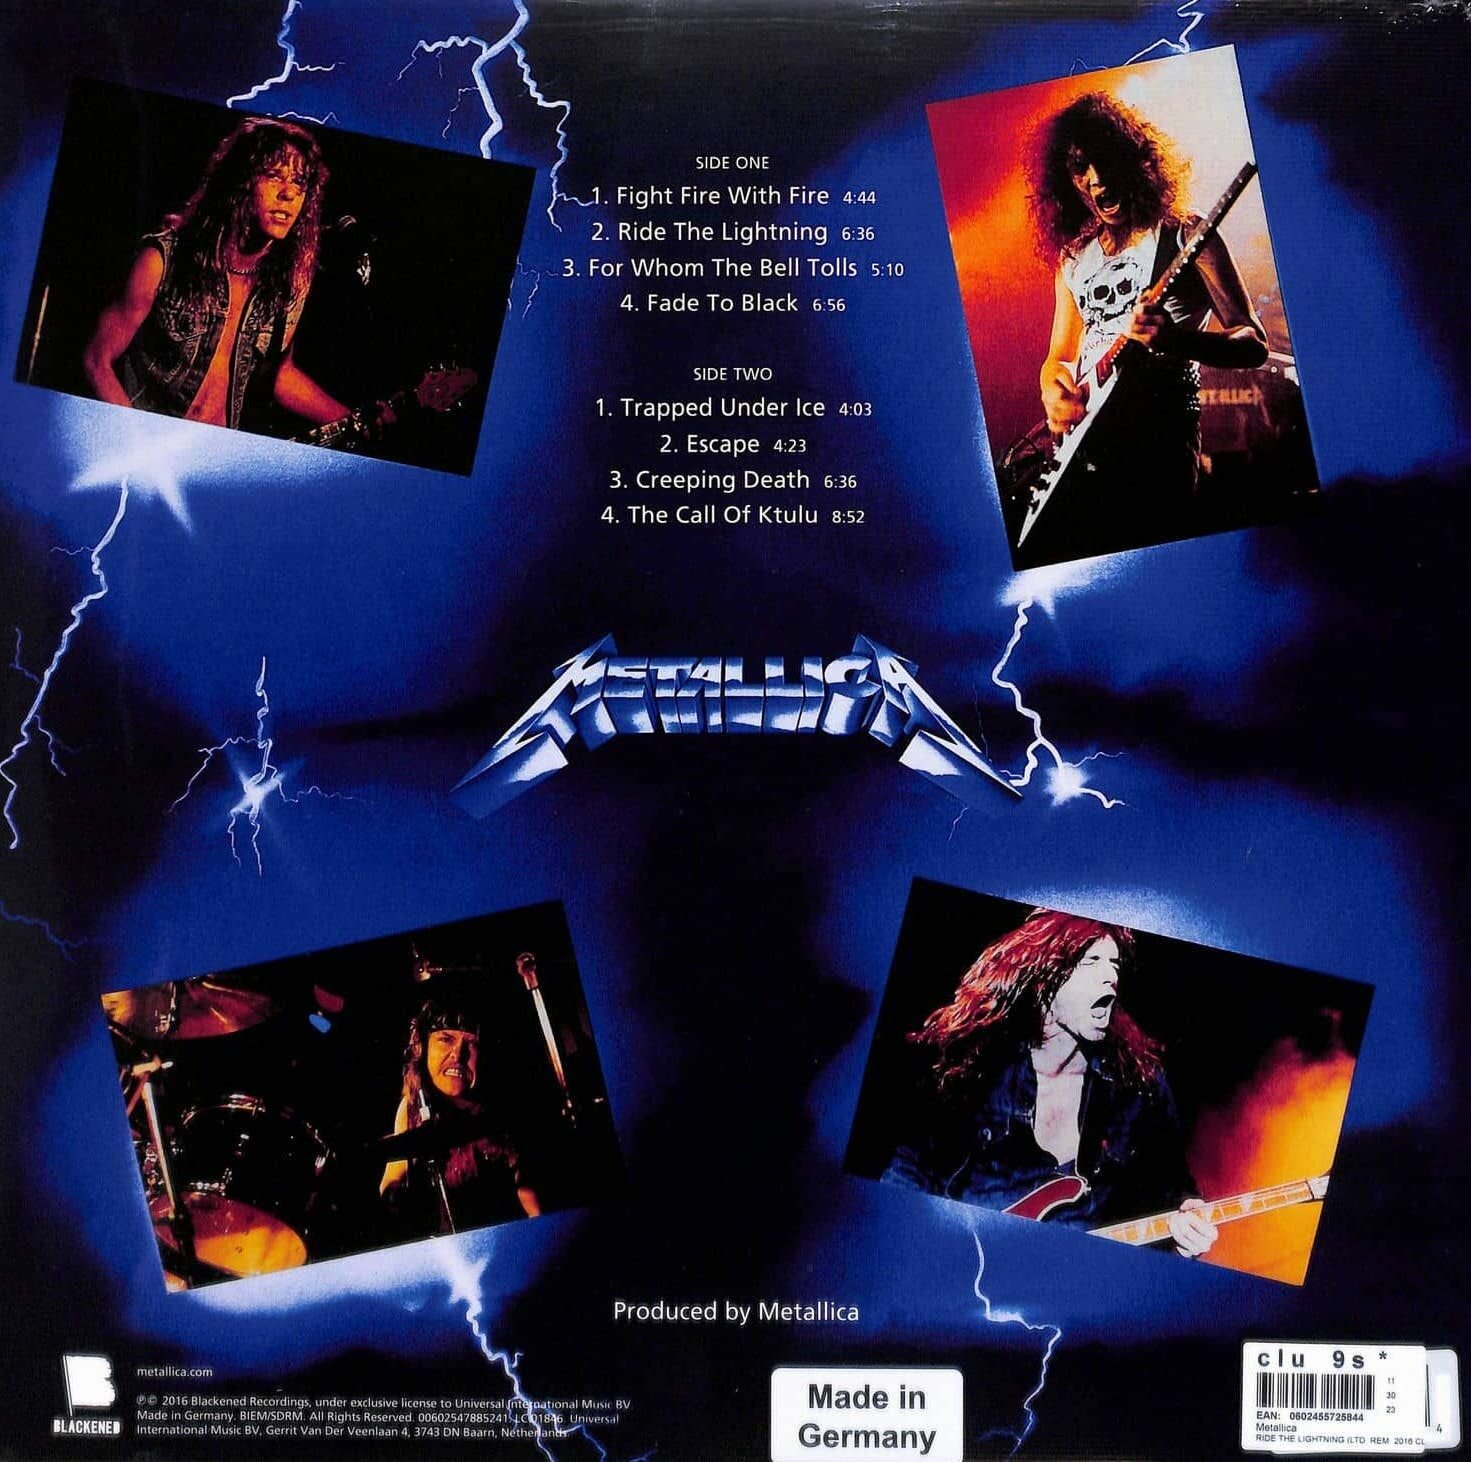 Metallica – Ride The Lightning (Electric Blue Vinyl)